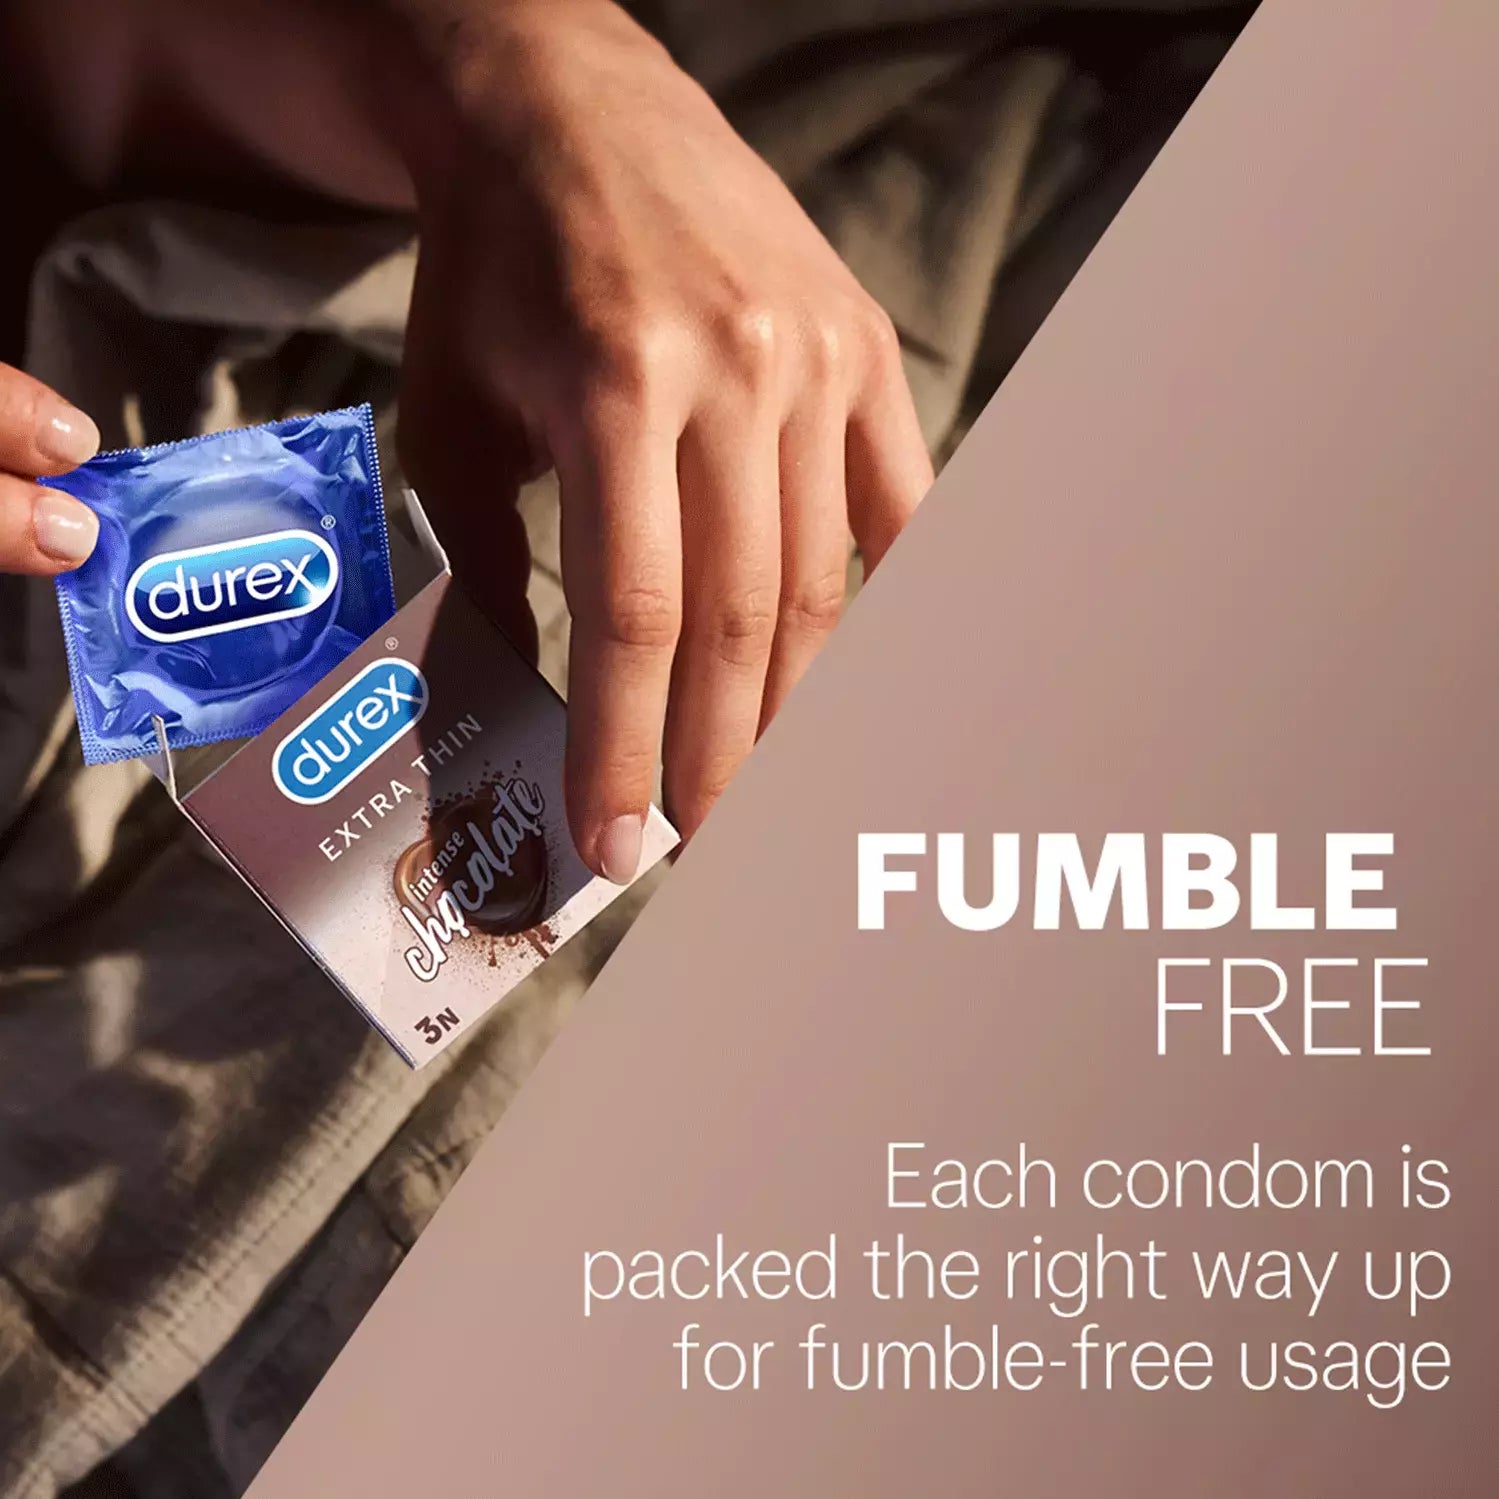 Durex Extra Thin Intense Chocolate Flavoured Condoms - 3pcs